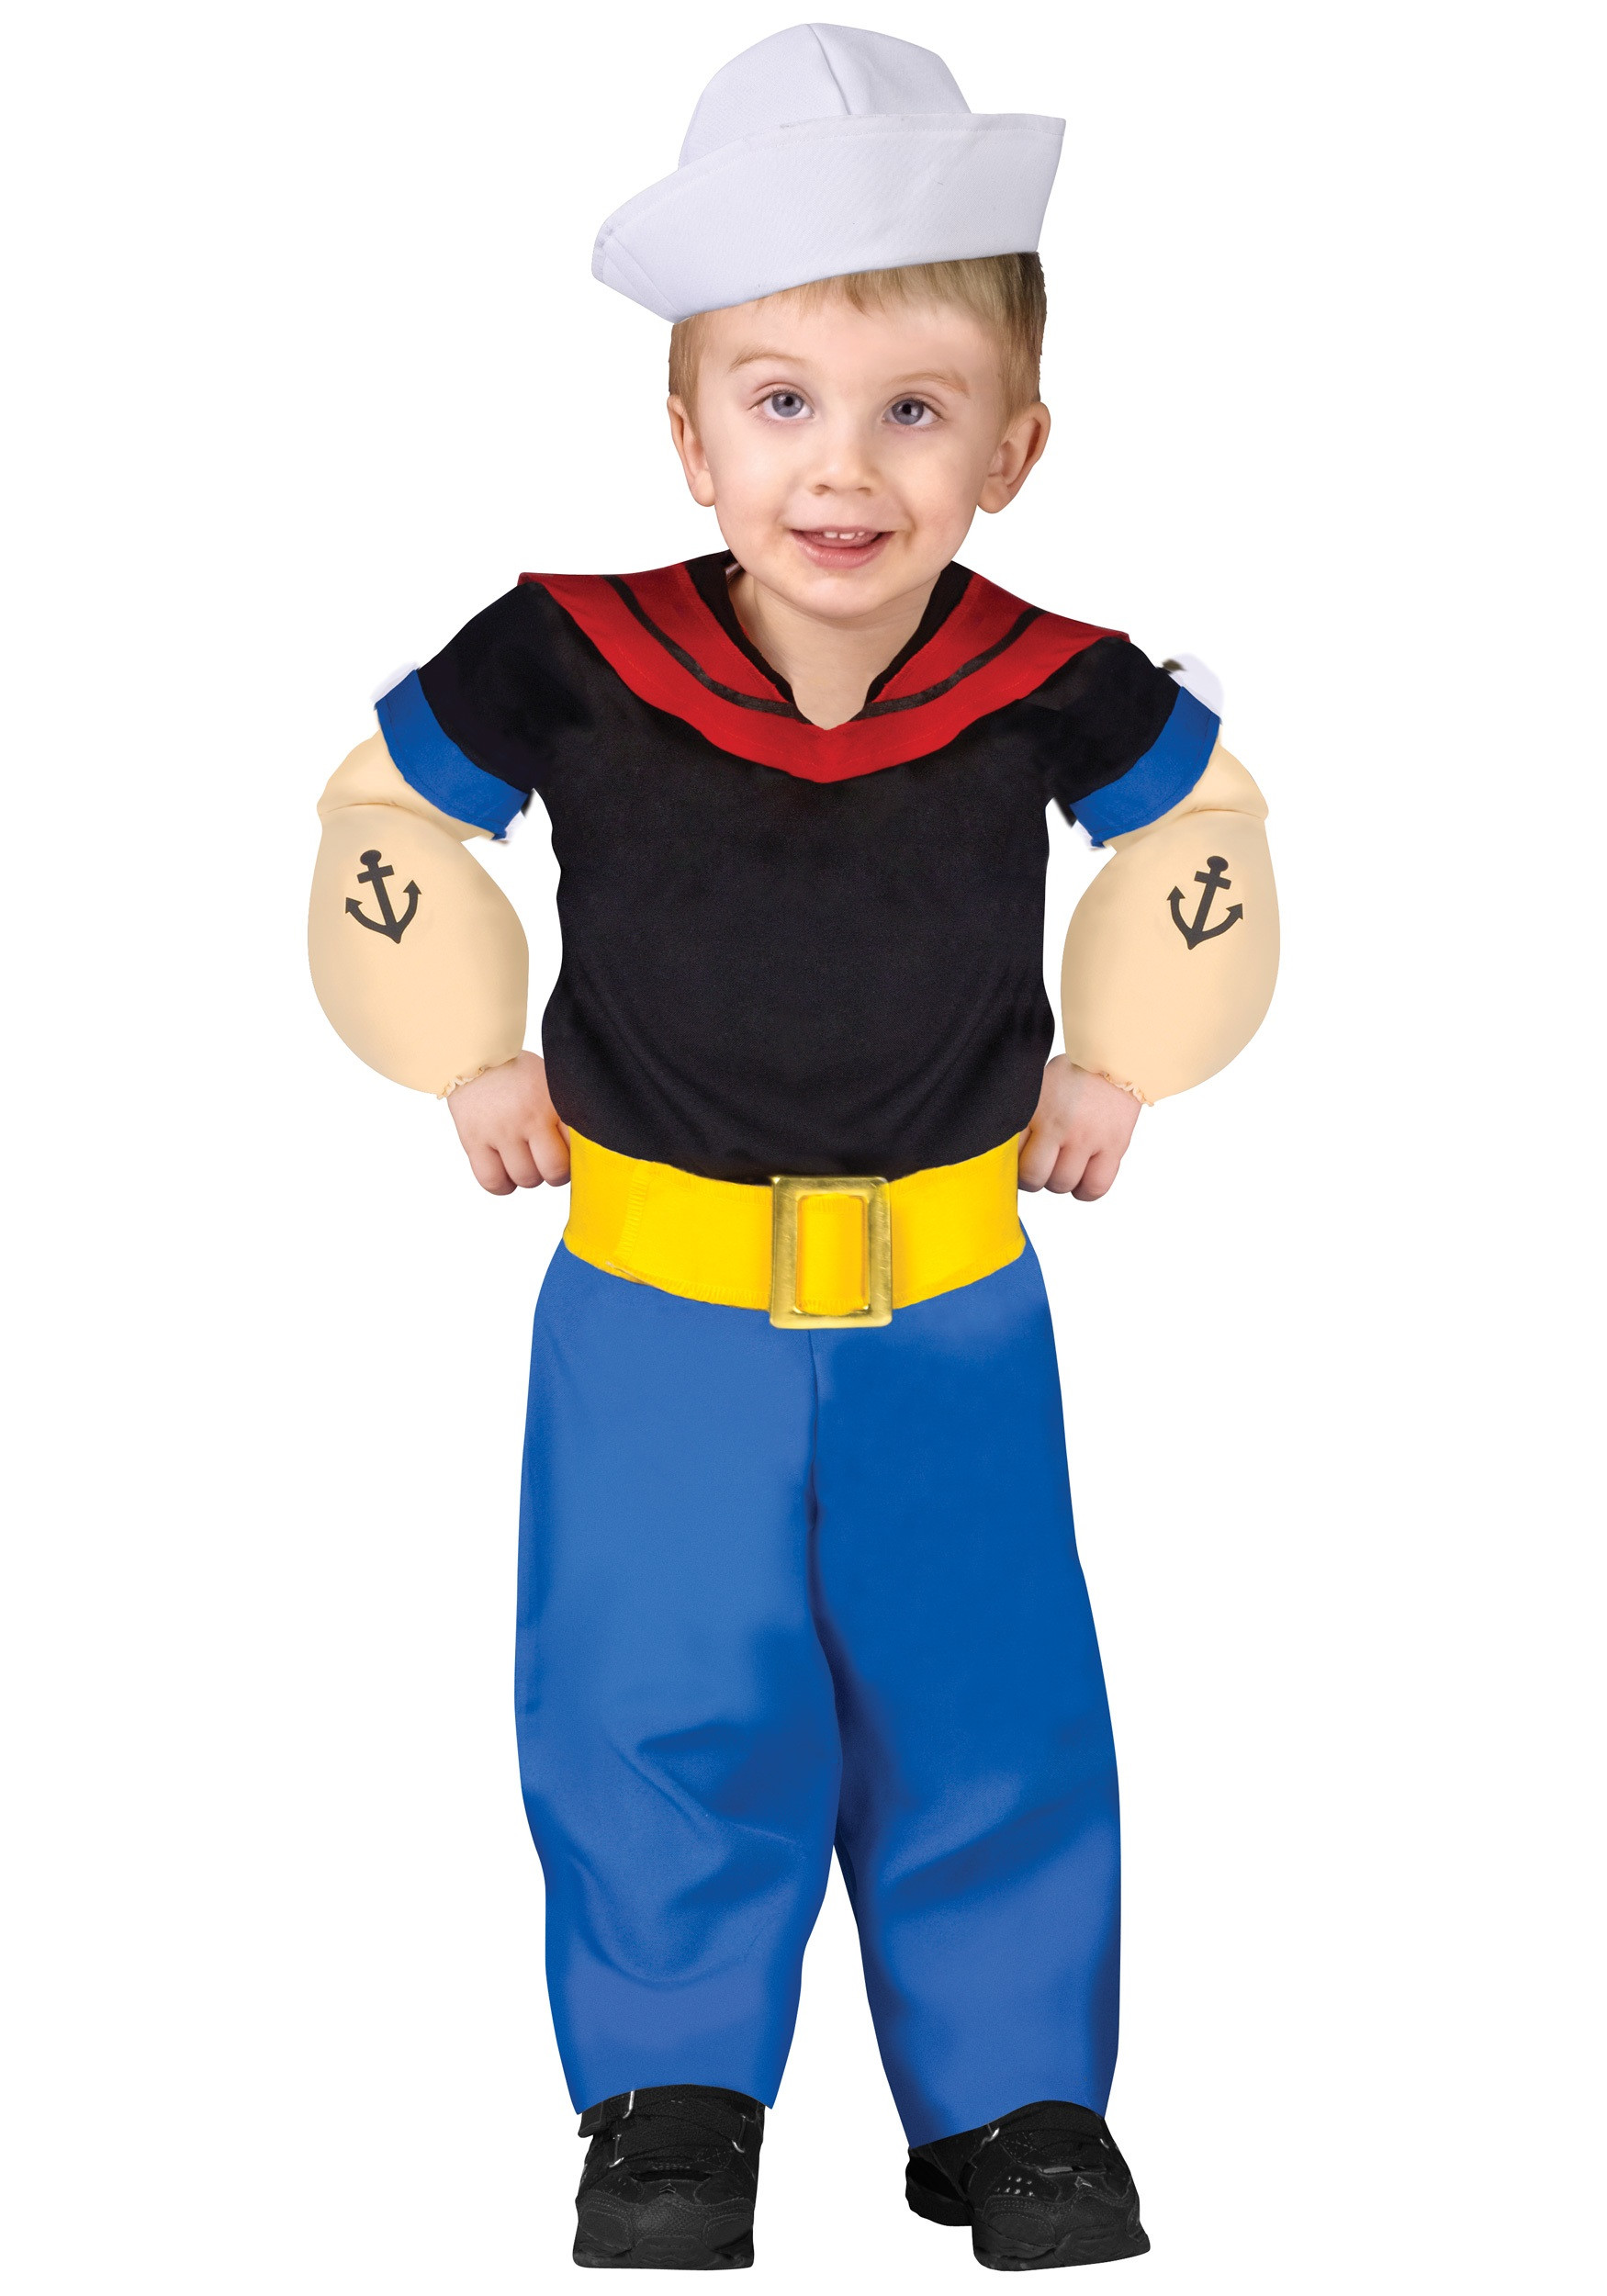 DIY Boy Costumes
 Toddler Boys Popeye Costume Popeye Costumes for Kids